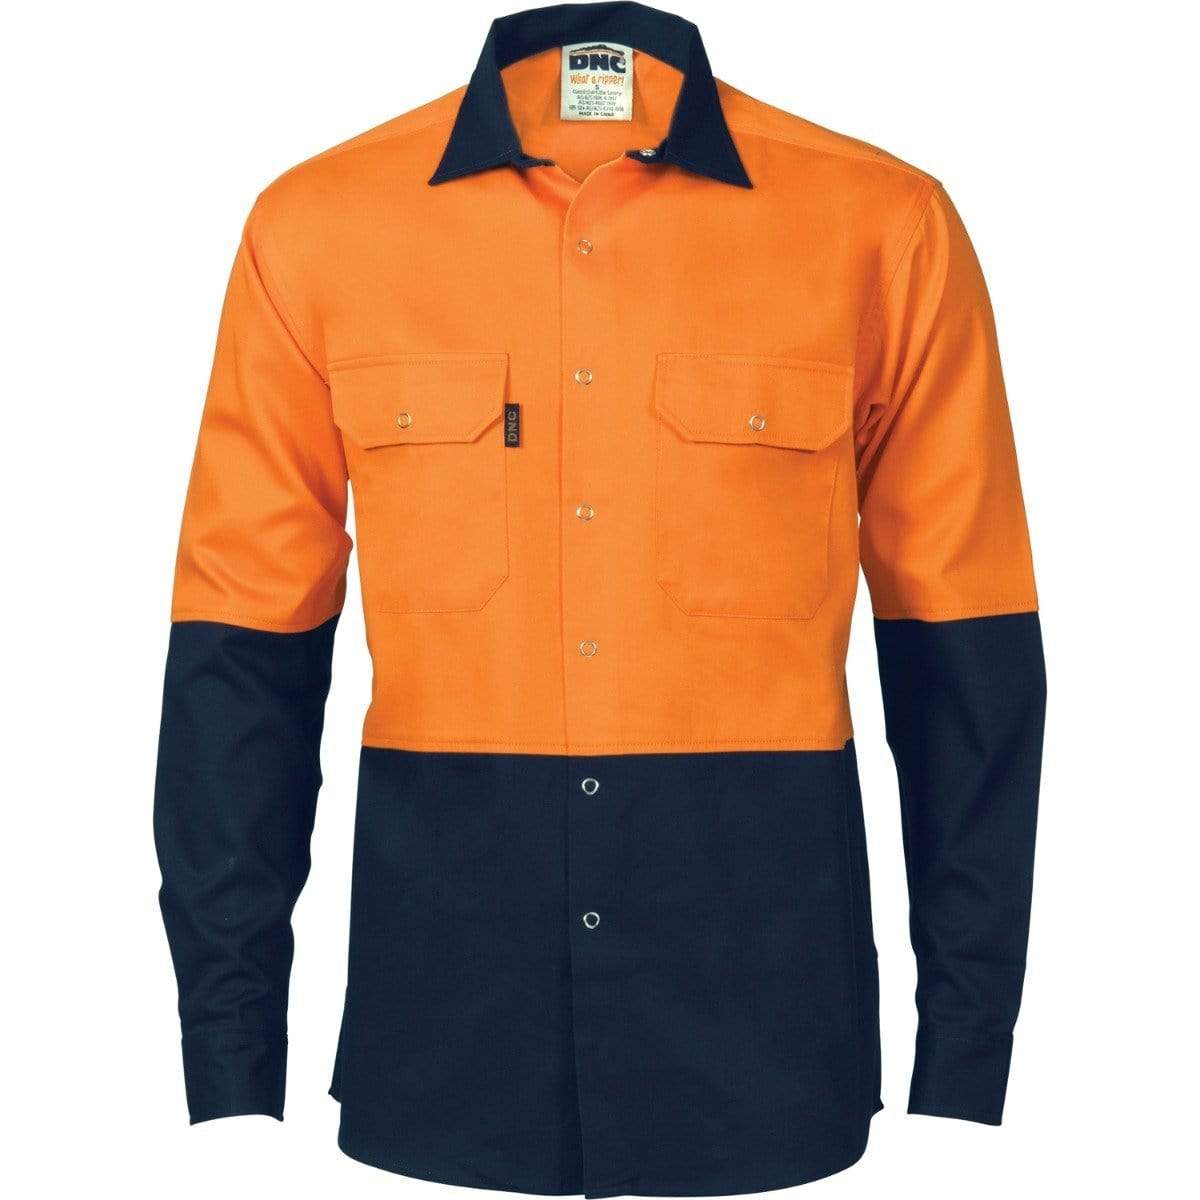 Dnc Workwear Hi-vis Two Tone Drill Shirt With Press Studs - 3838 Work Wear DNC Workwear Orange/Navy S 